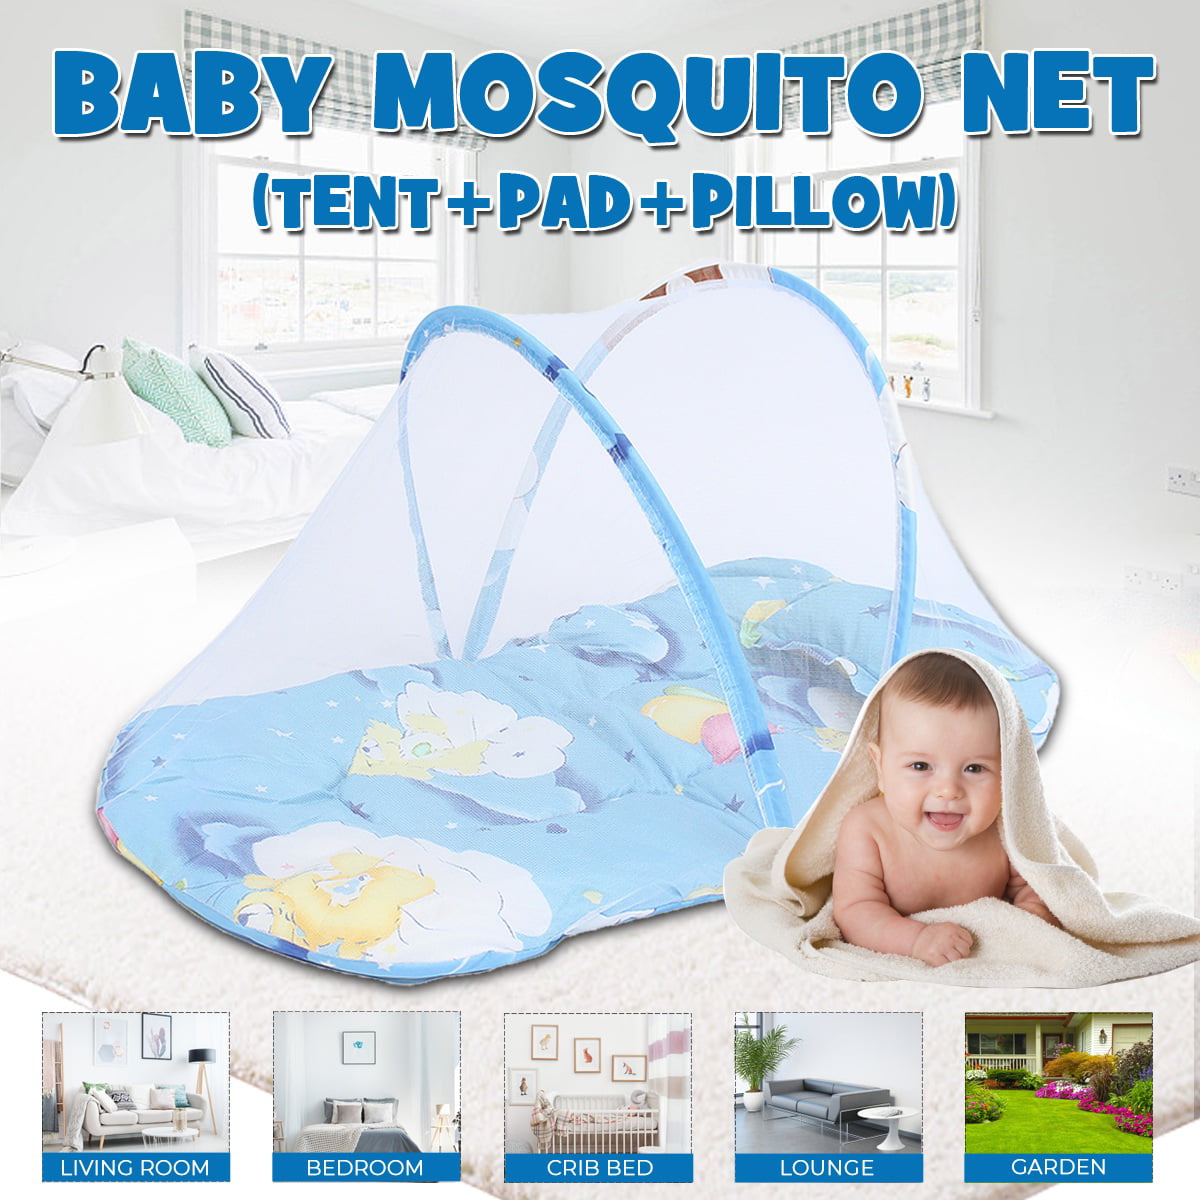 Baby Bedding Crib Kids Netting Folding Mosquito Nets Infant Bed Mattress Pillow 